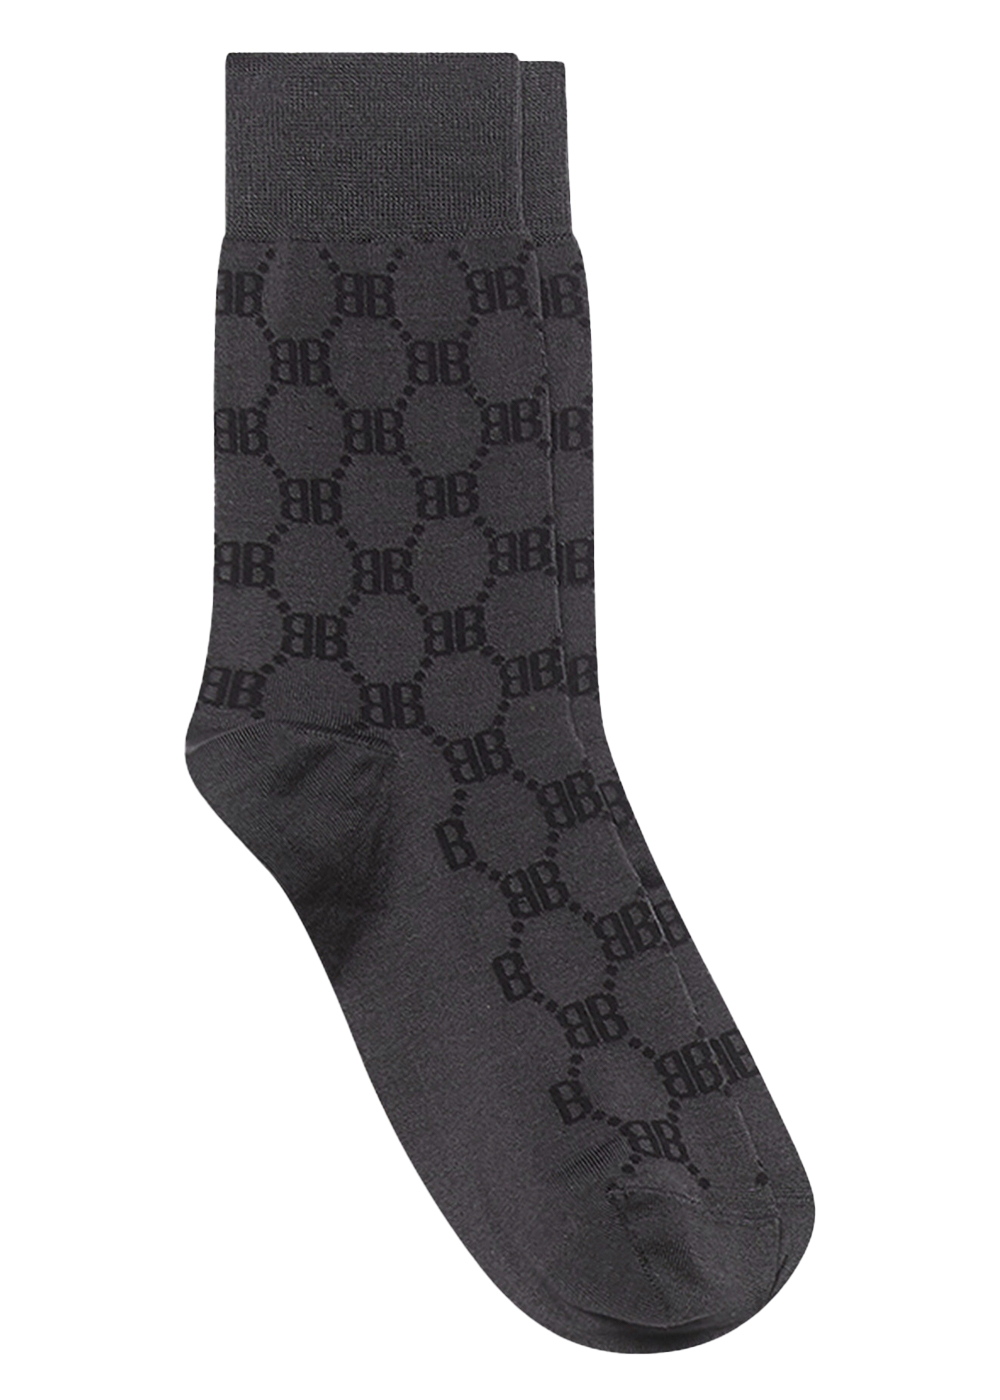 Gucci x Balenciaga The Hacker Project Hacker BB Tennis Socks Charcoal Grey